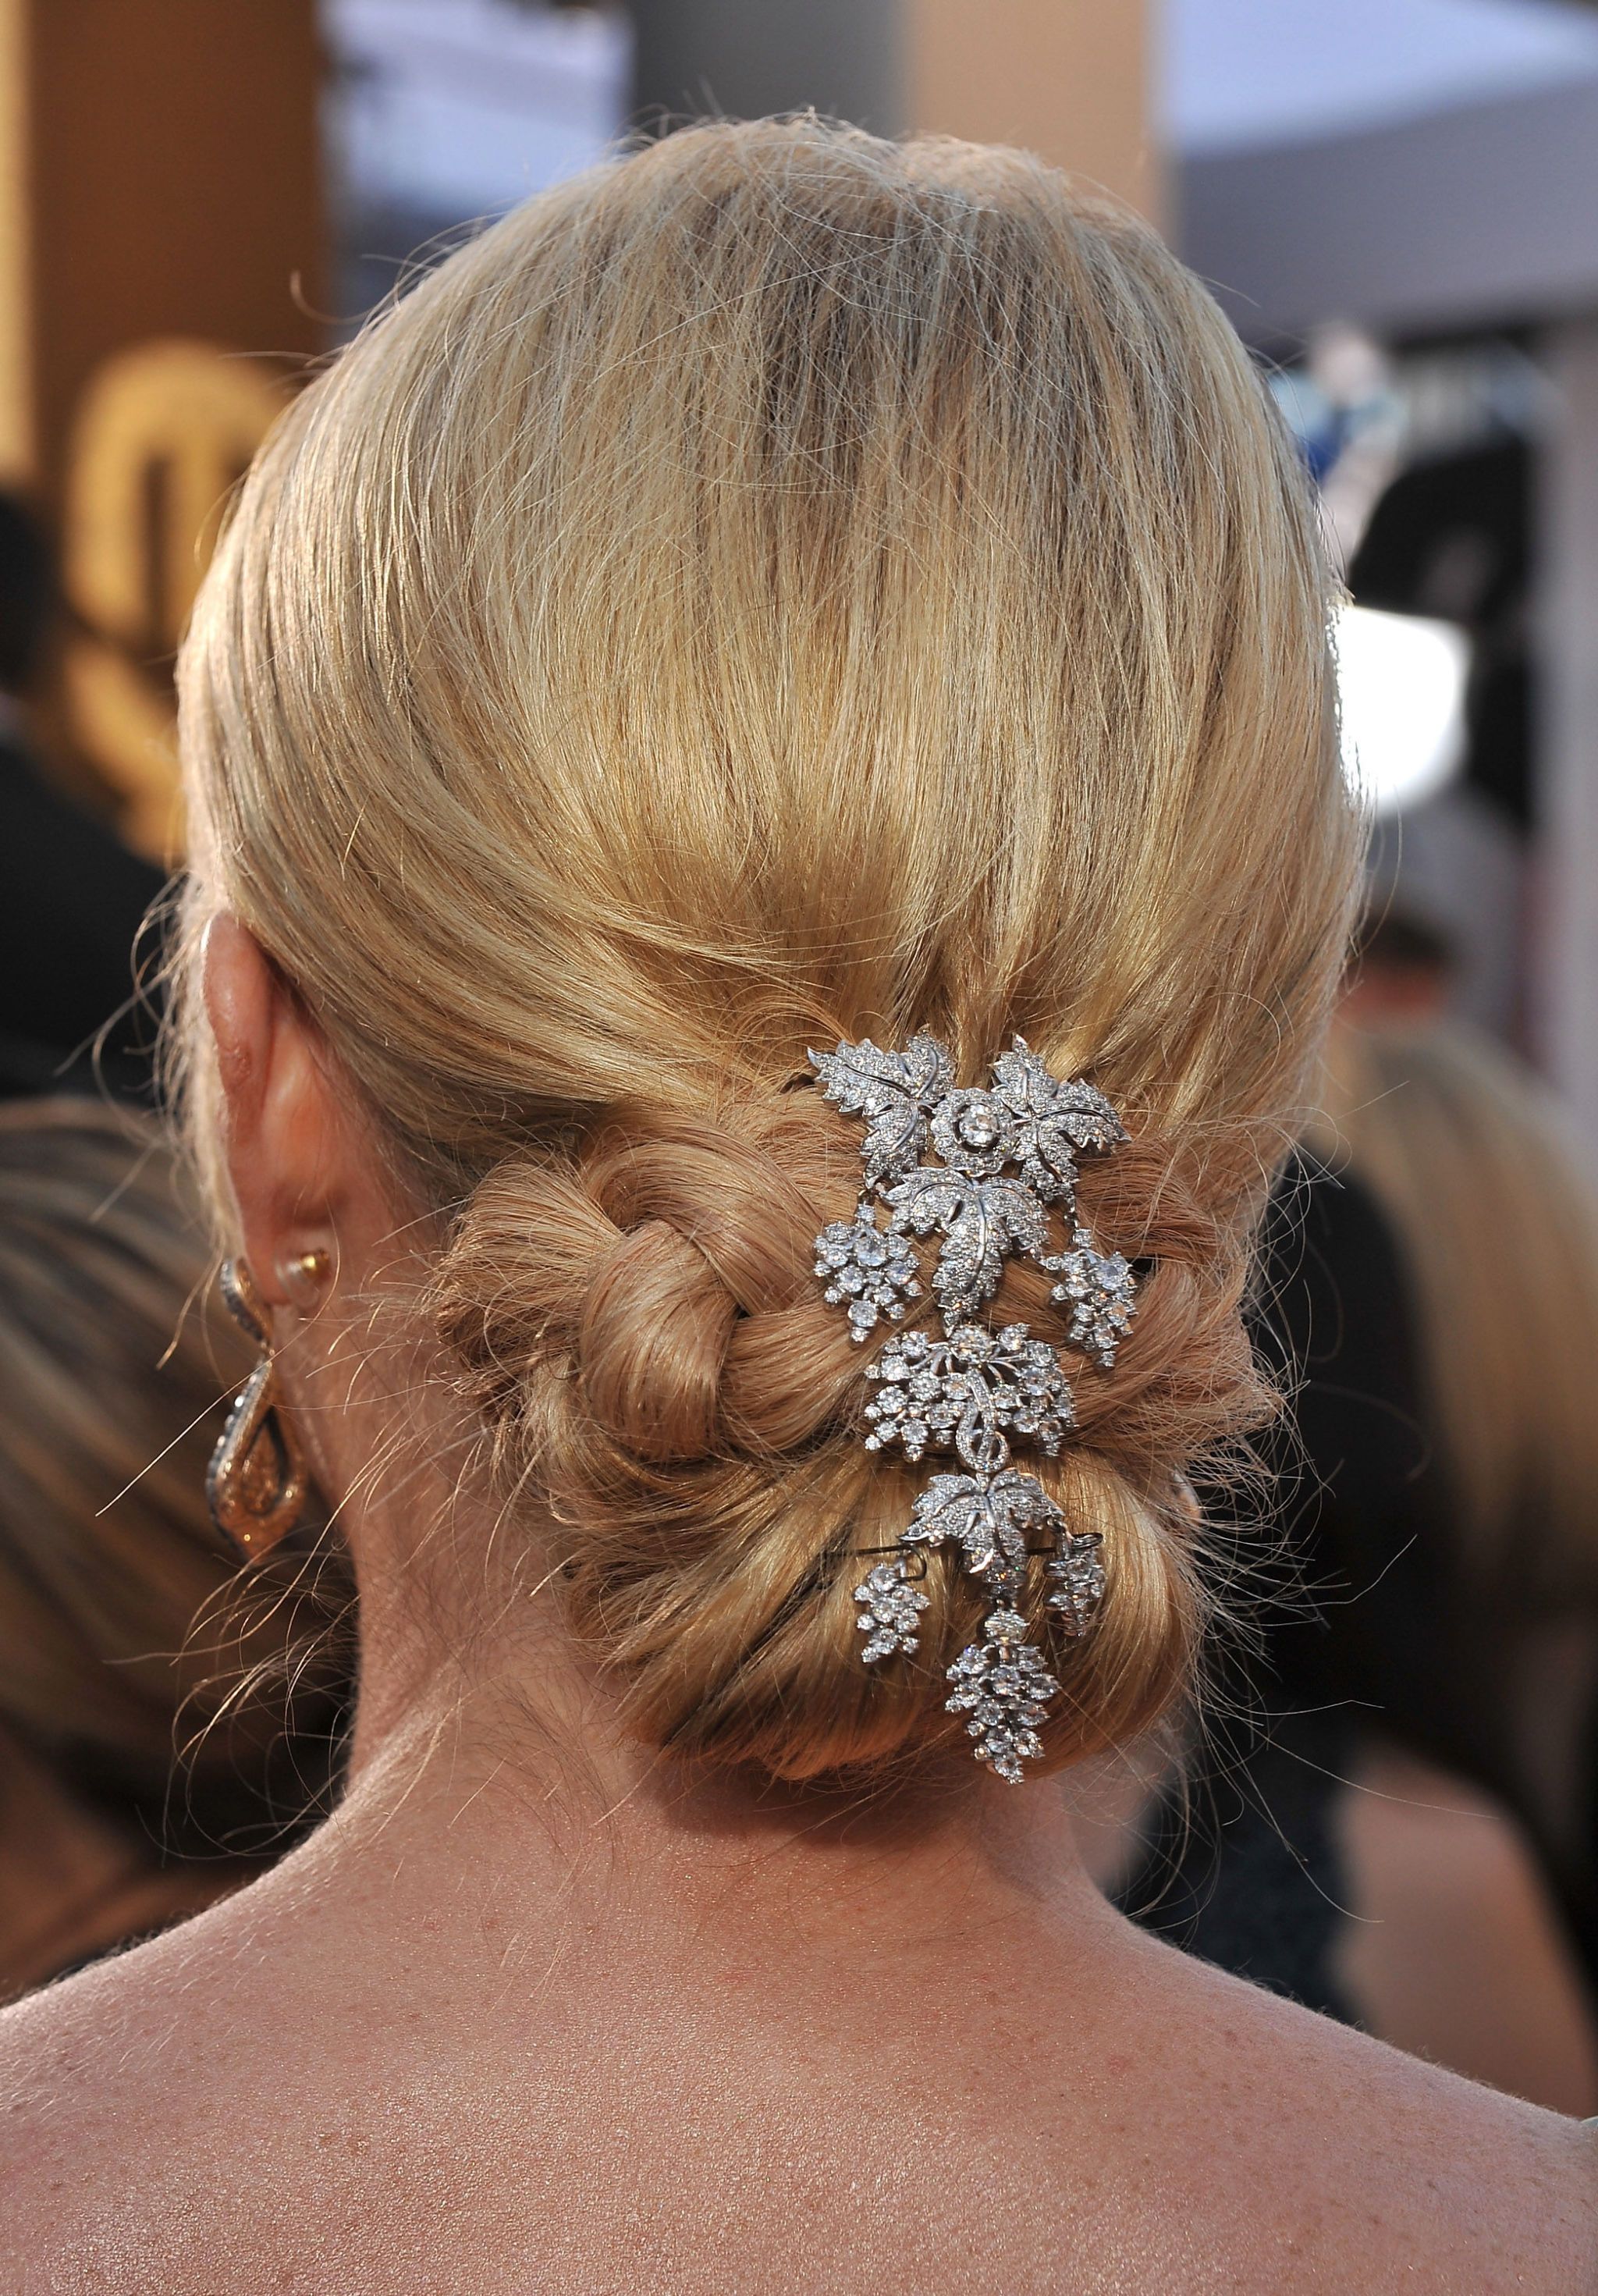 Choosing a wedding hairstyle: not as easy as it may seem | Pollardi News